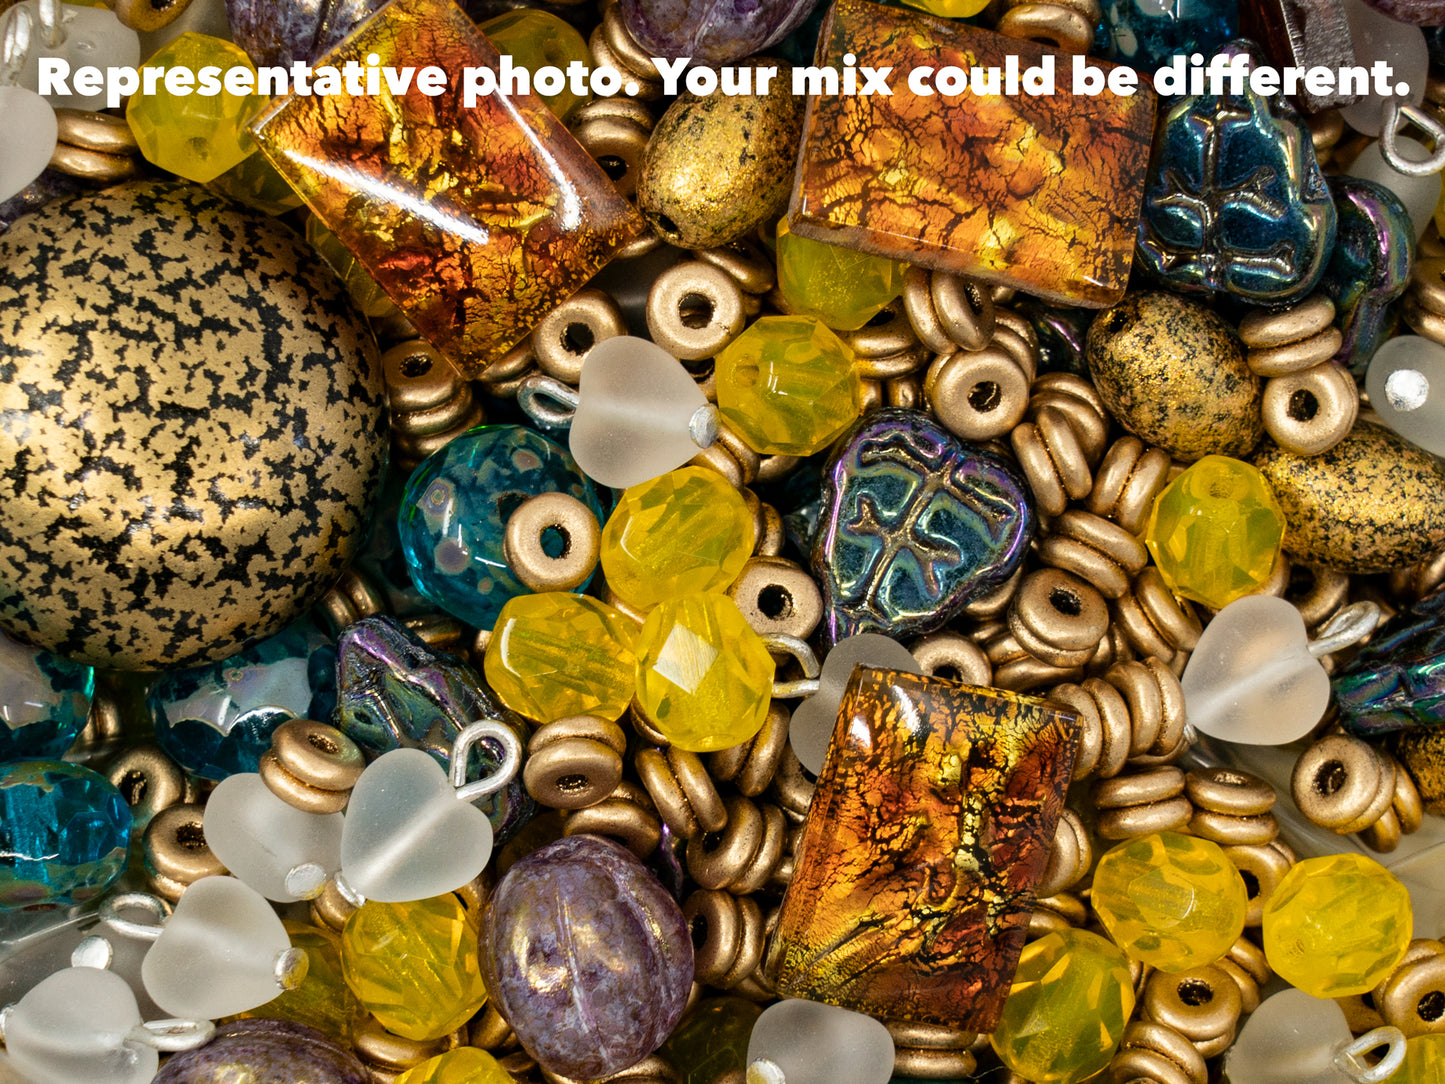 Surprise Mix - Czech Glass Beads & Cabs - Vintage & modern glass beads